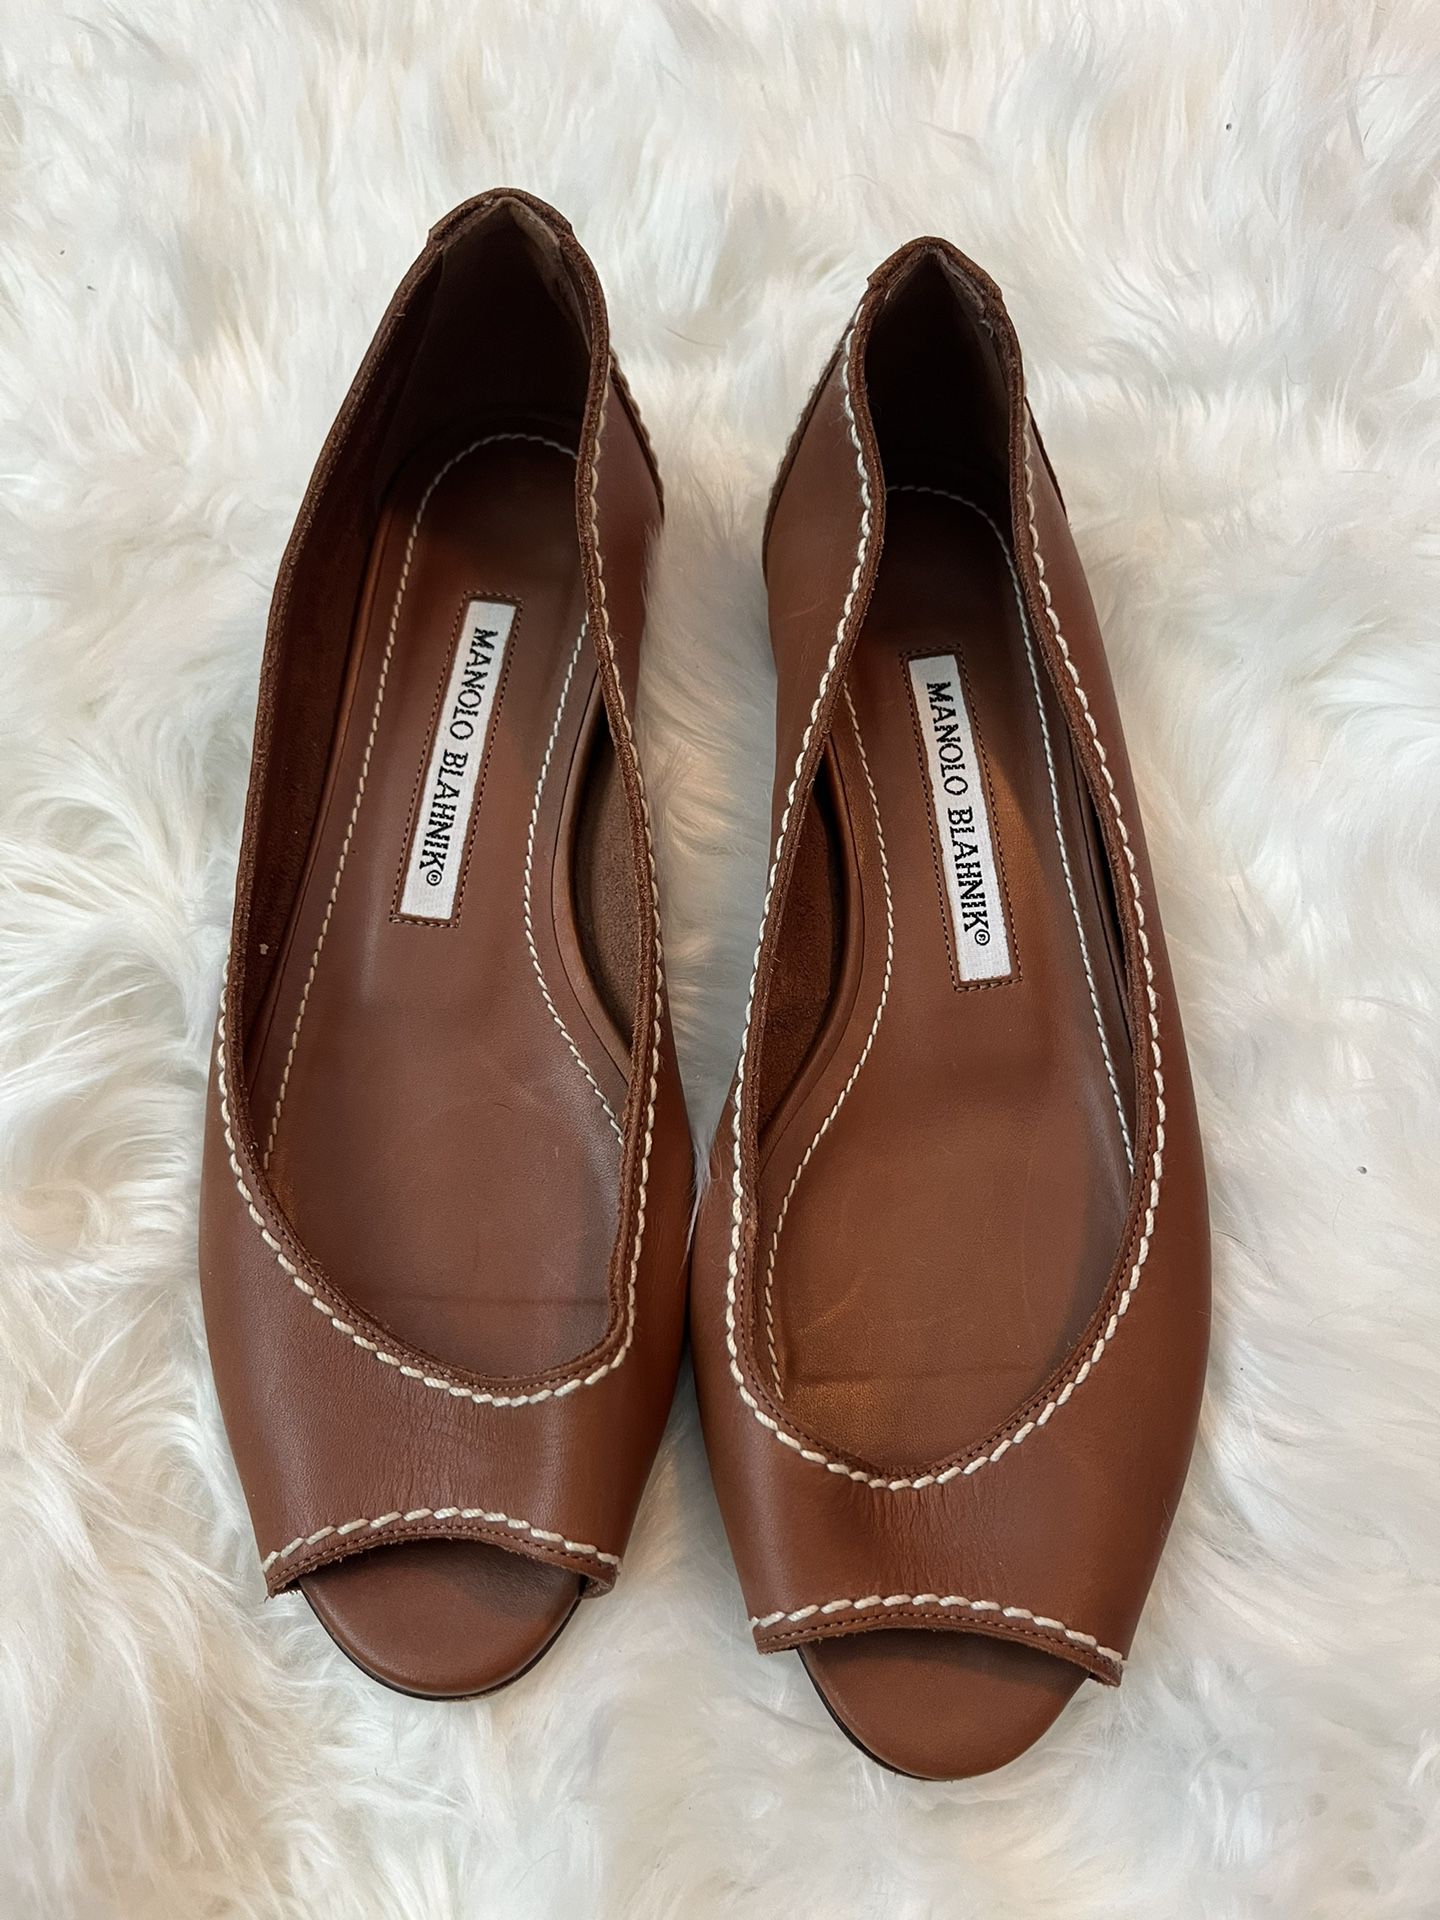 Brown Leather Manolo Blahnik Flats